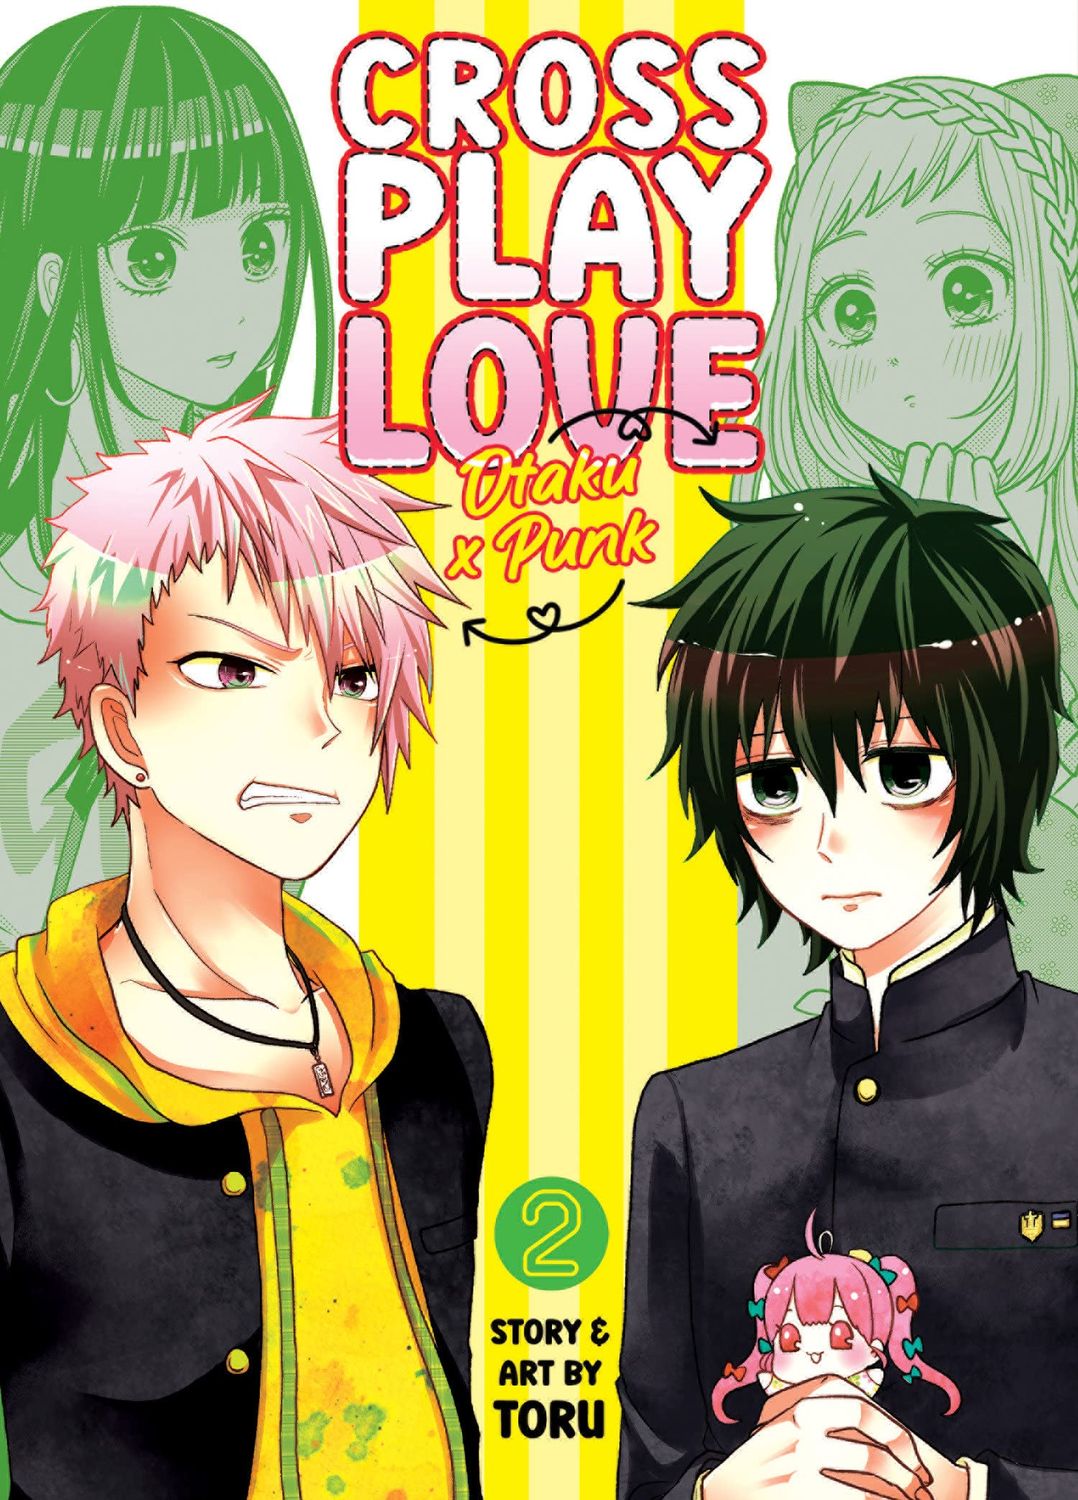 Love In Orbit Manga Ch 1 Crossplay Love: Otaku X Punk: Volume 2 from Crossplay Love by Tooru  published by Seven Seas Entertainment @ ForbiddenPlanet.com - UK and  Worldwide Cult Entertainment Megastore